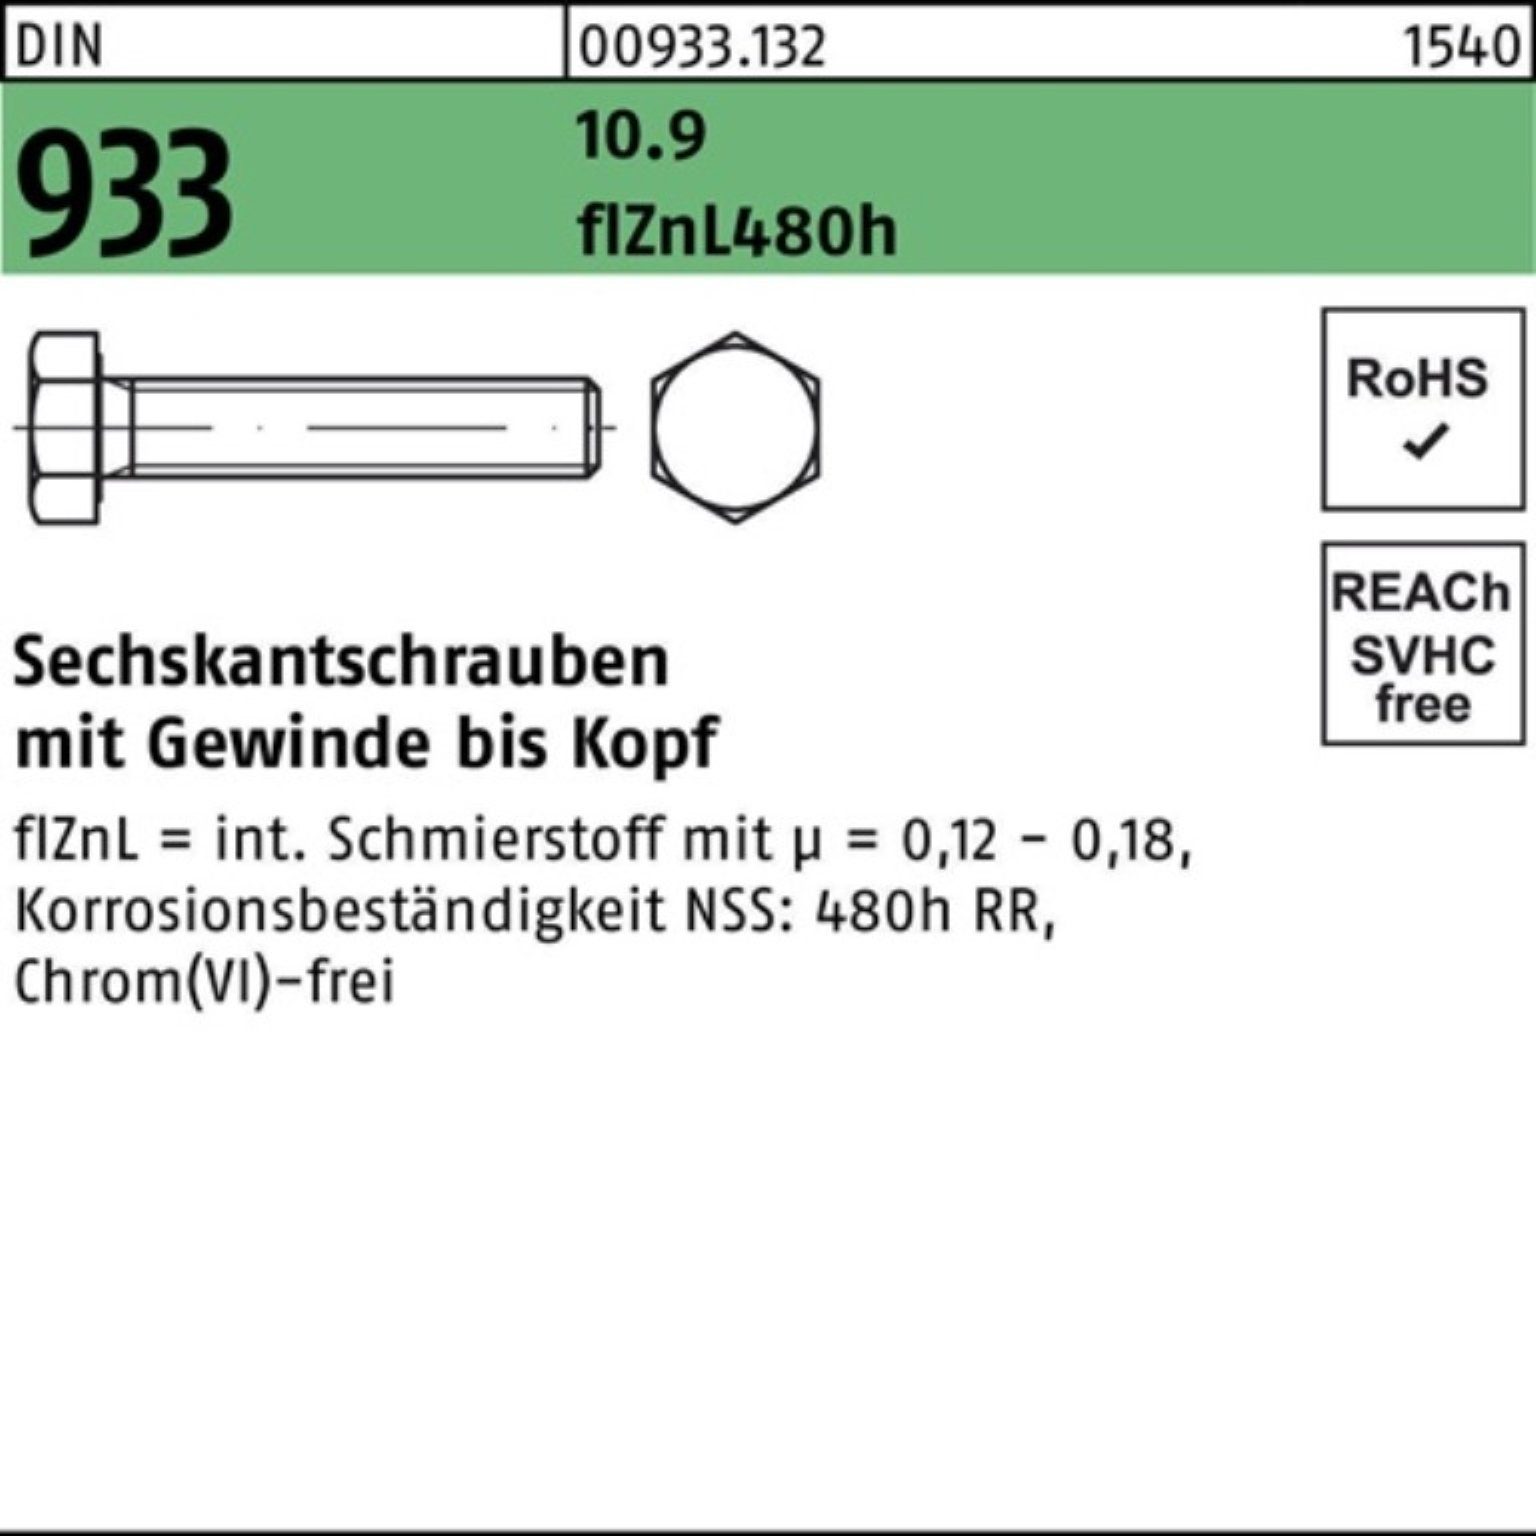 Reyher Sechskantschraube 100er Pack Sechskantschraube DIN 933 VG M16x 80 10.9 flZnL/nc/x/x/480h